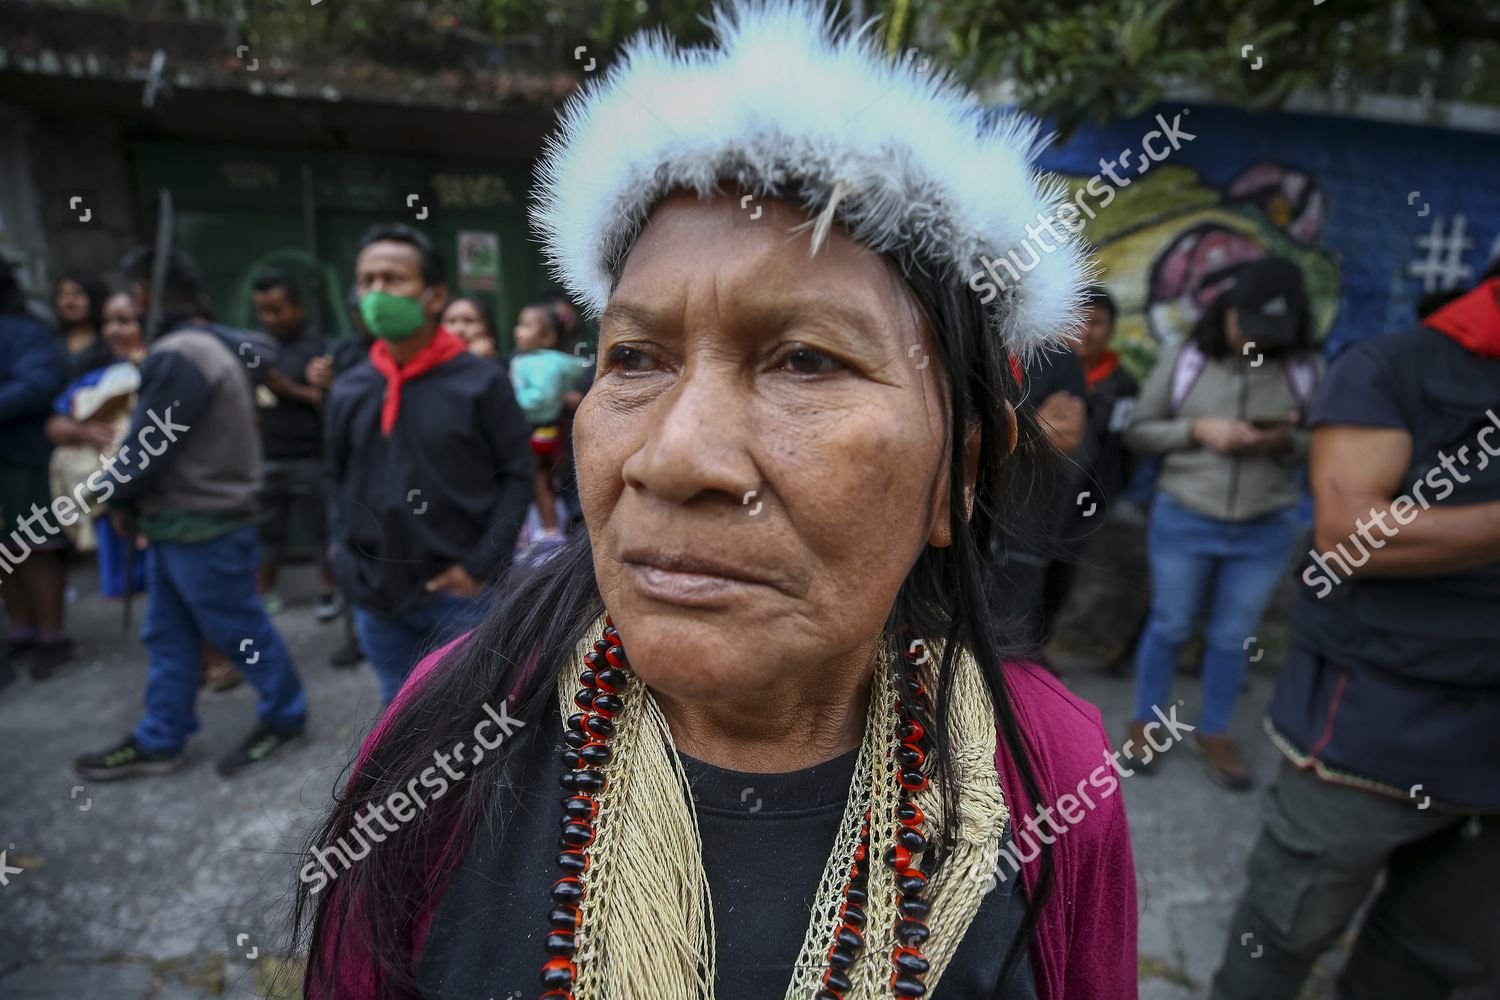 ecuadorian native people